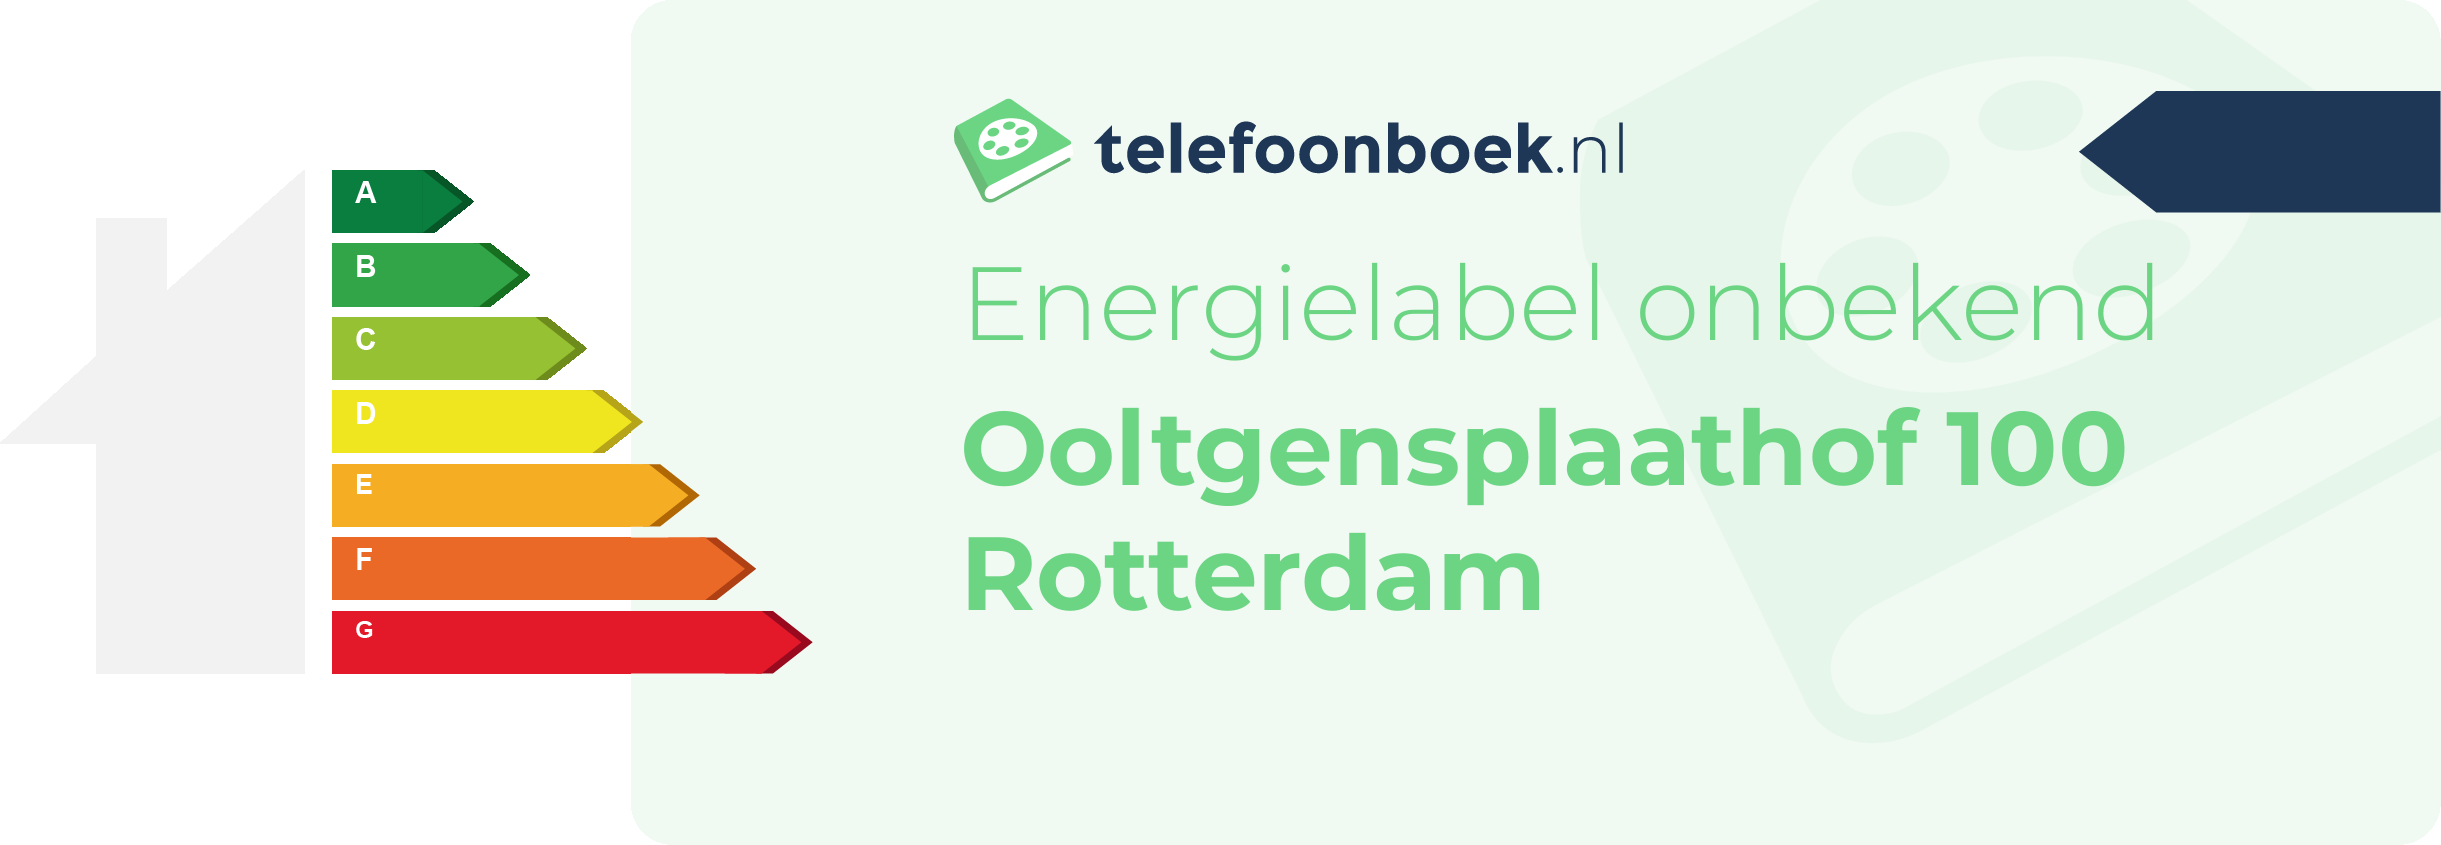 Energielabel Ooltgensplaathof 100 Rotterdam